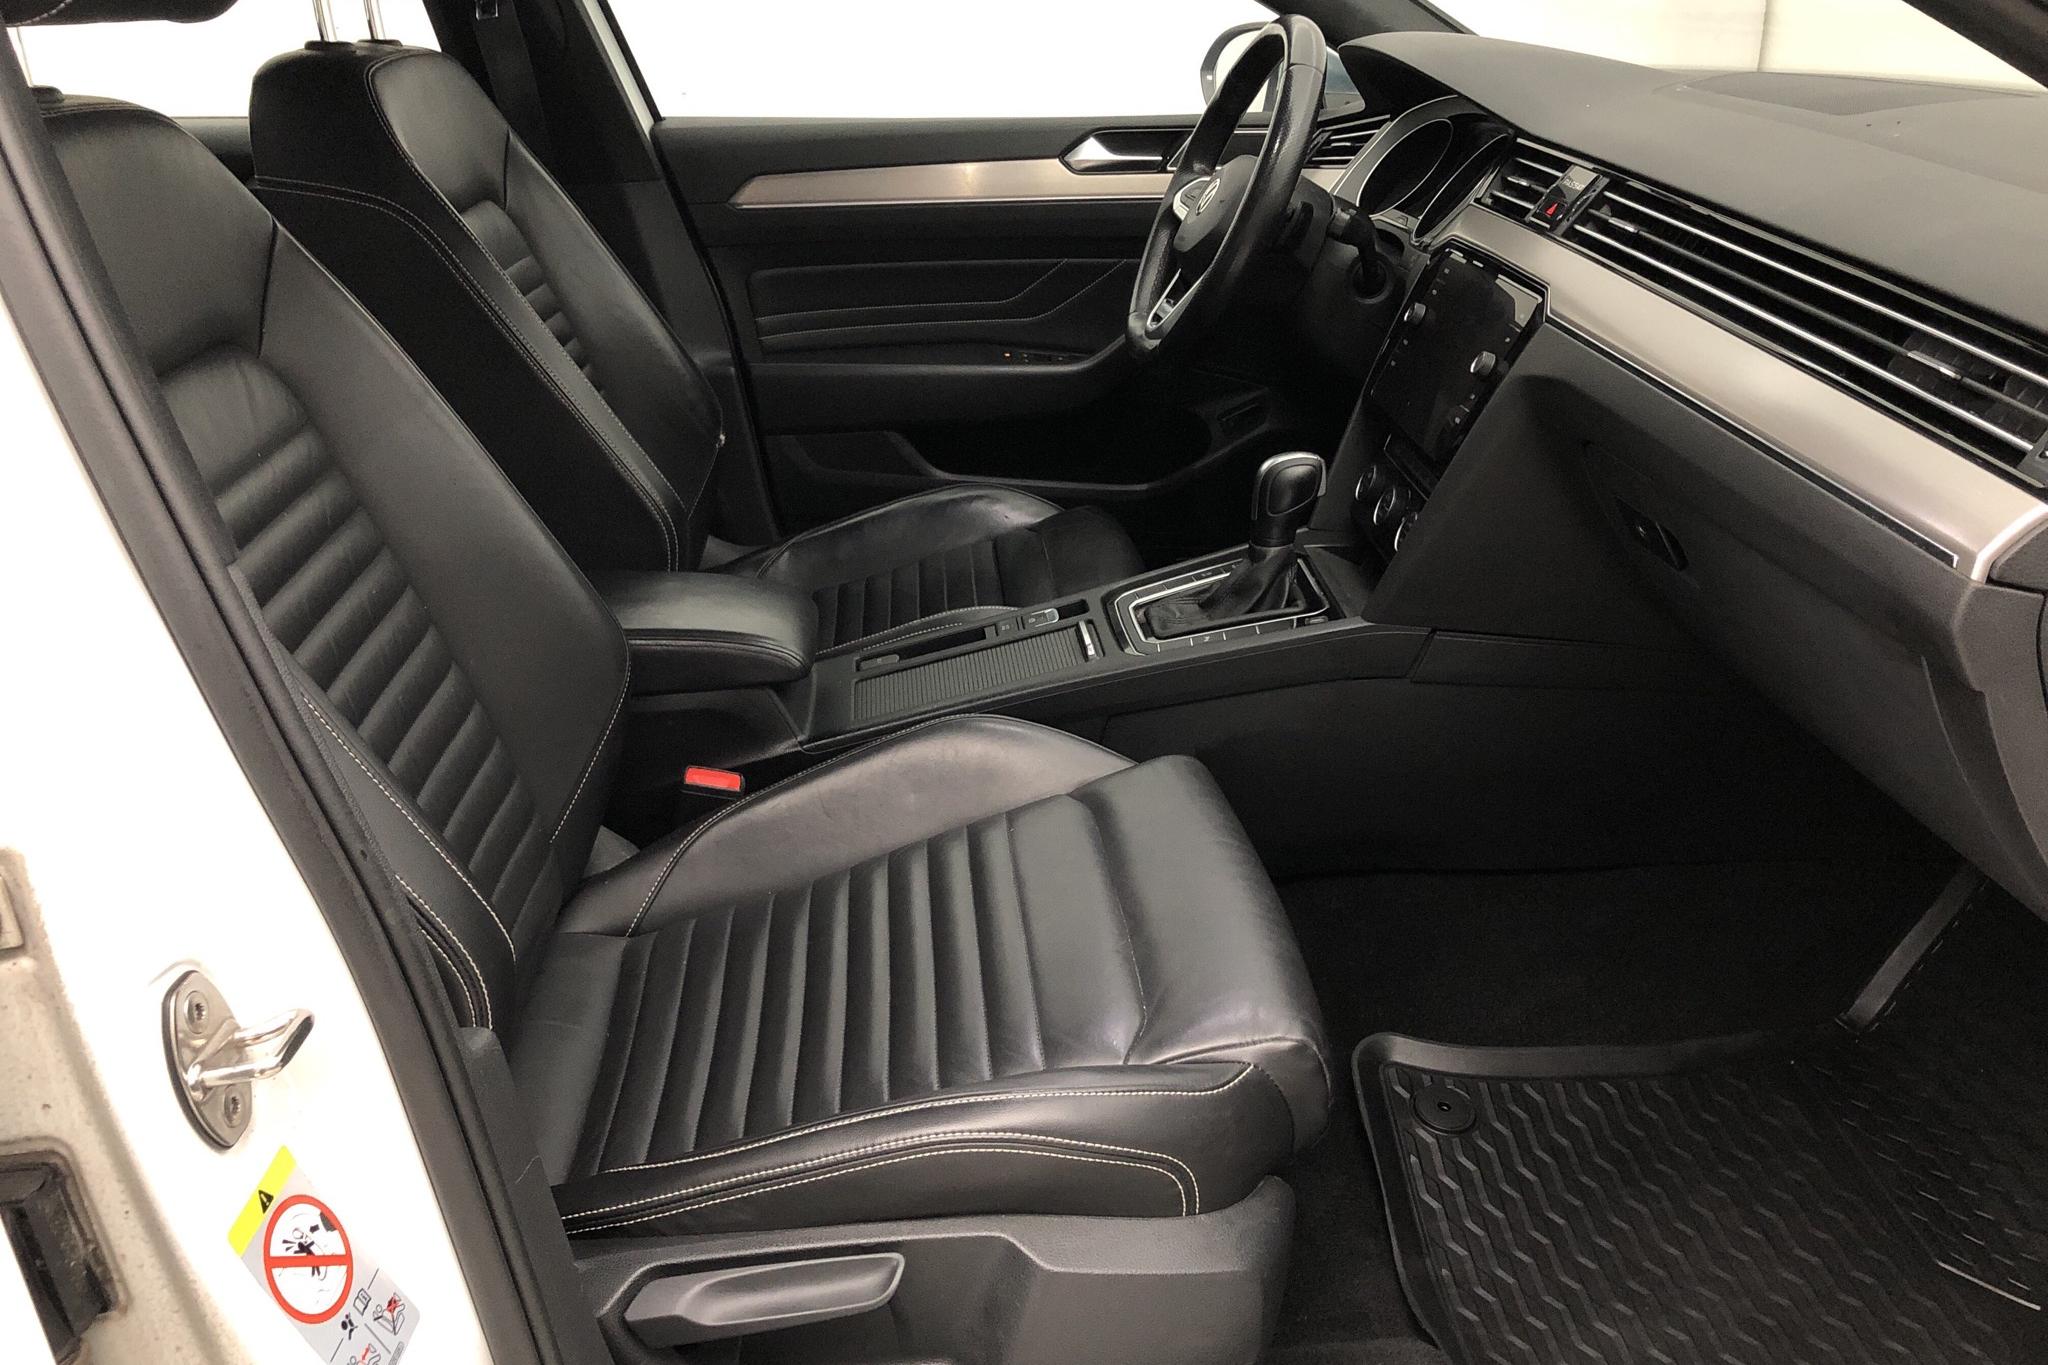 VW Passat Alltrack 2.0 TDI Sportscombi 4MOTION (190hk) - 344 430 km - Automatic - white - 2020